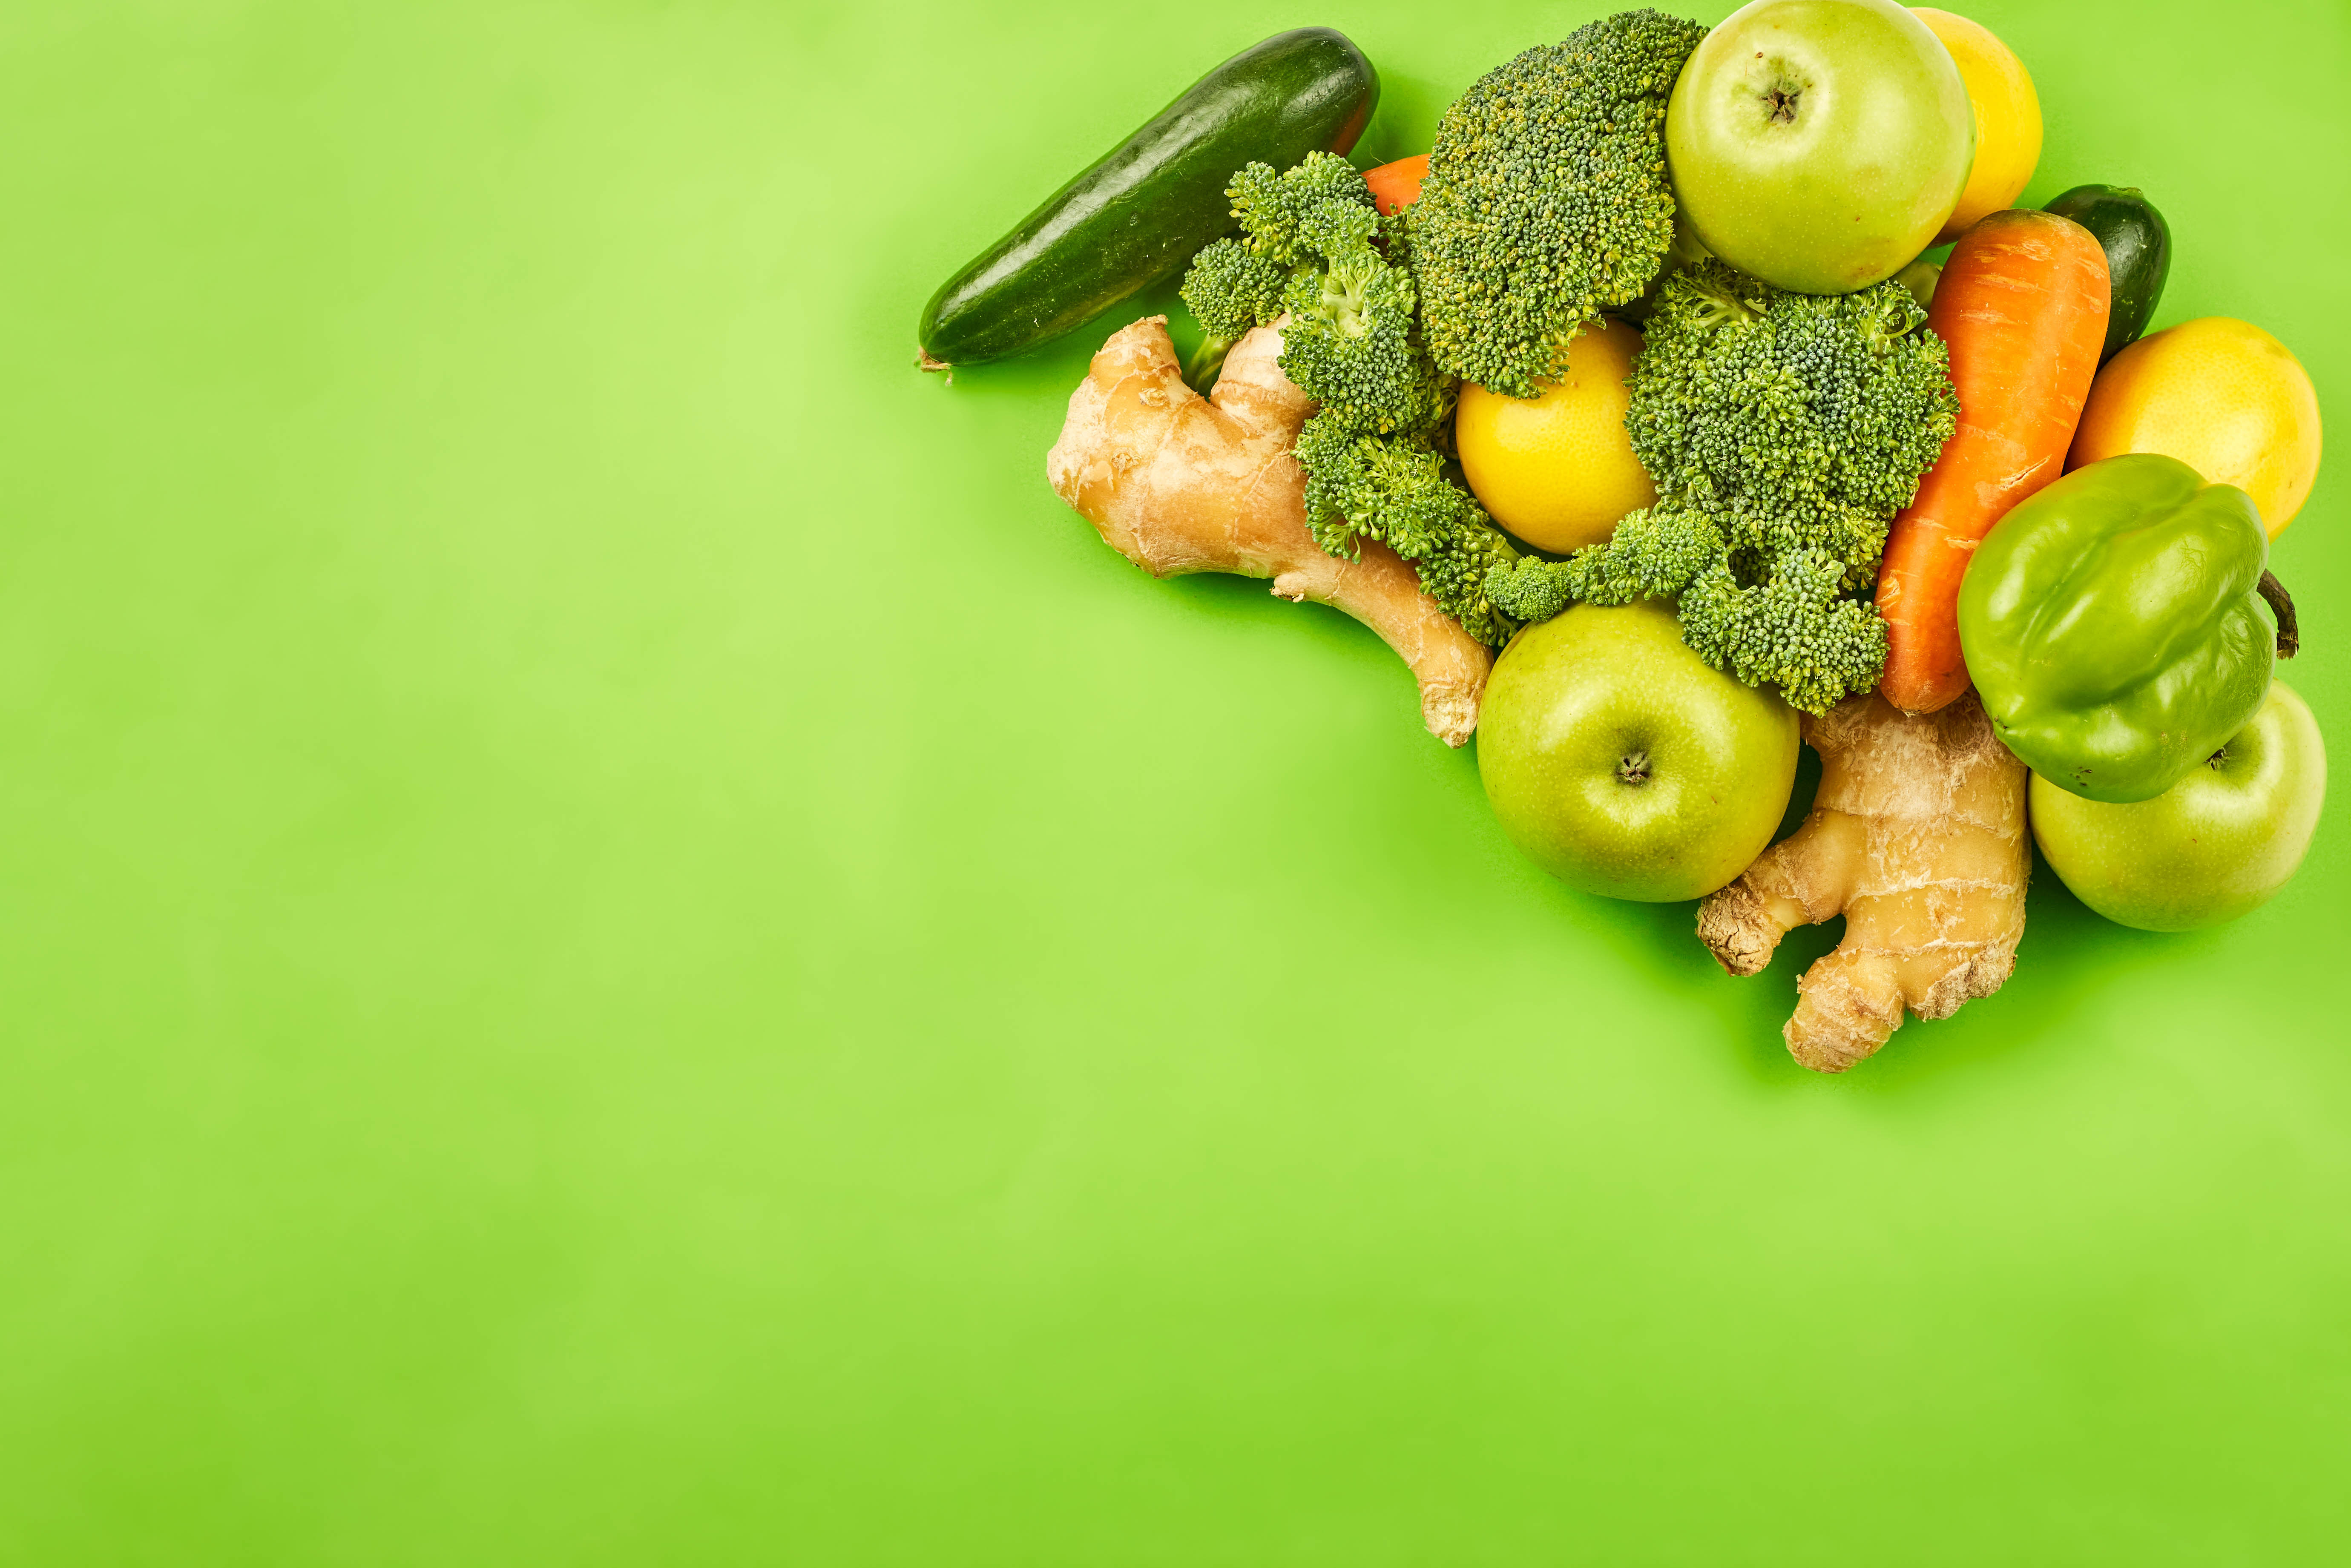 Fresh vegetables on light green background Desktop wallpapers 1024x1024